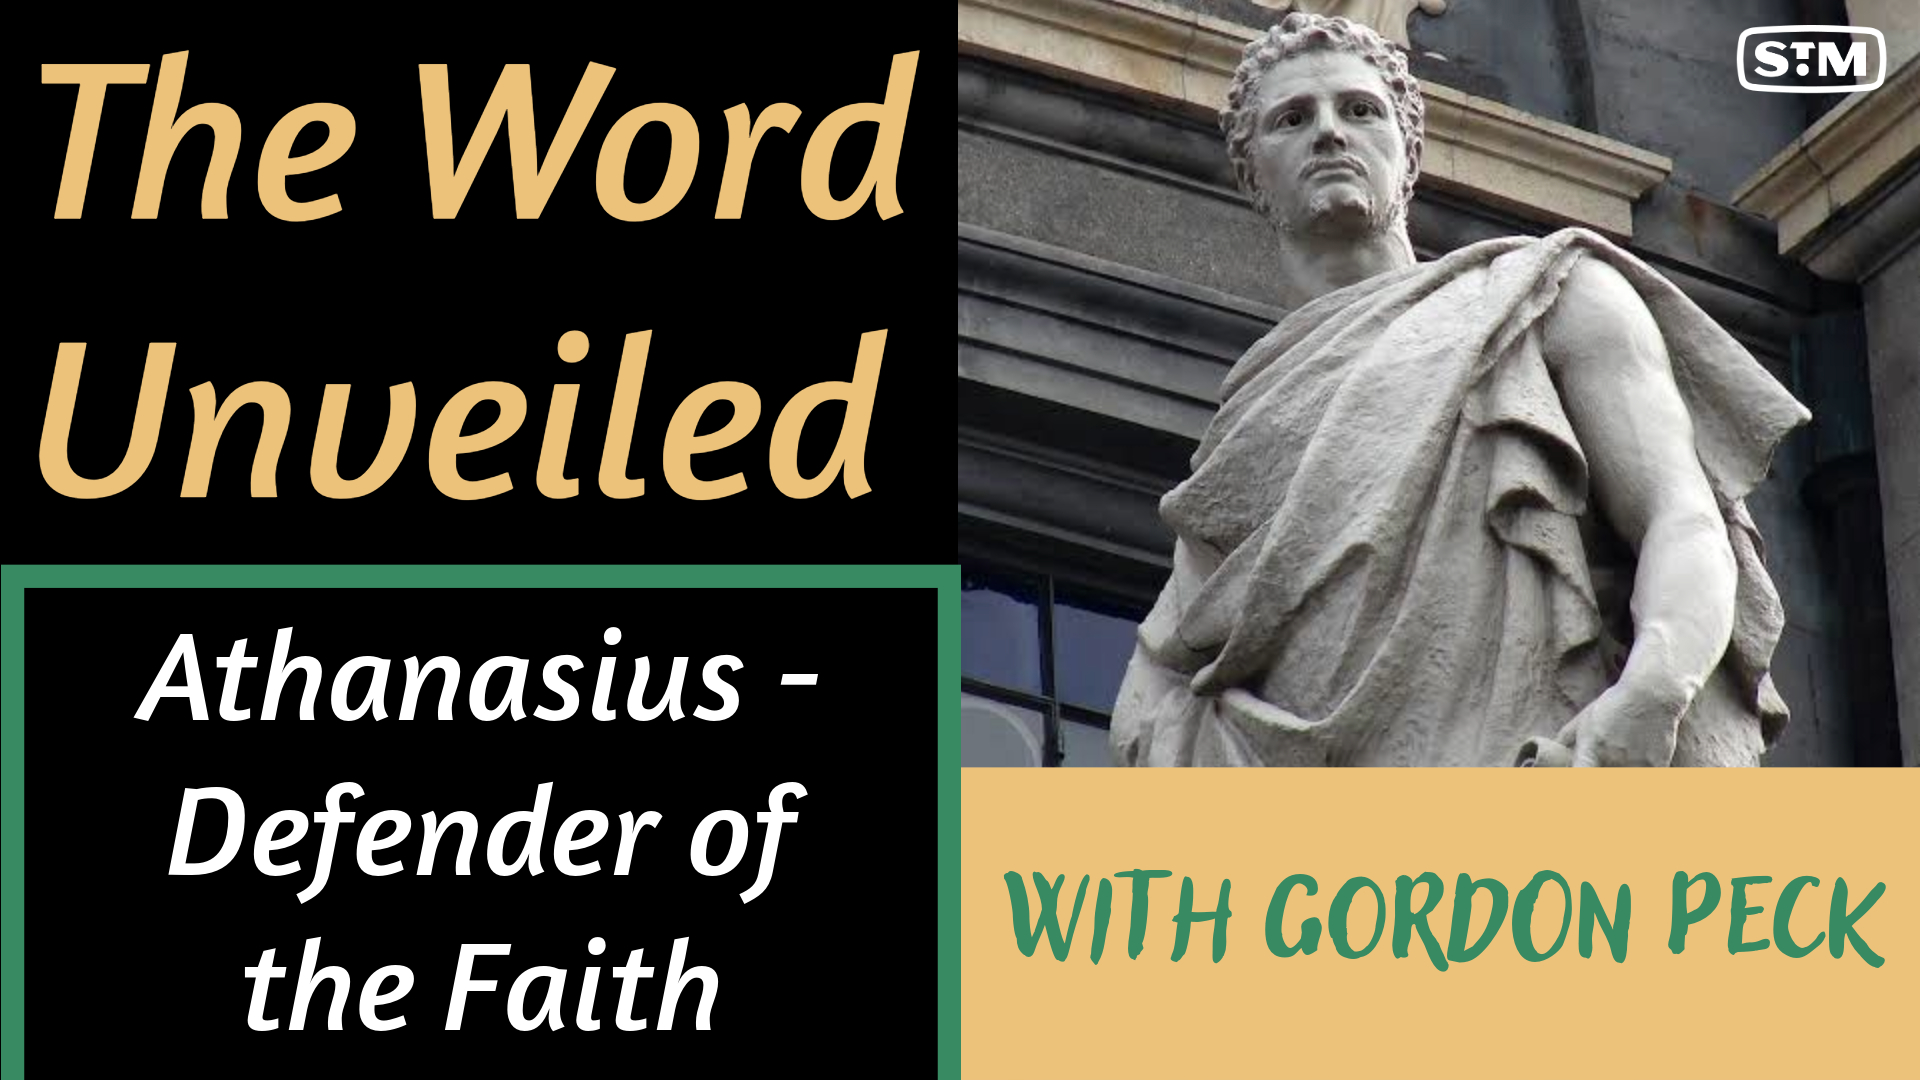 Athanasius - Defender of the Faith